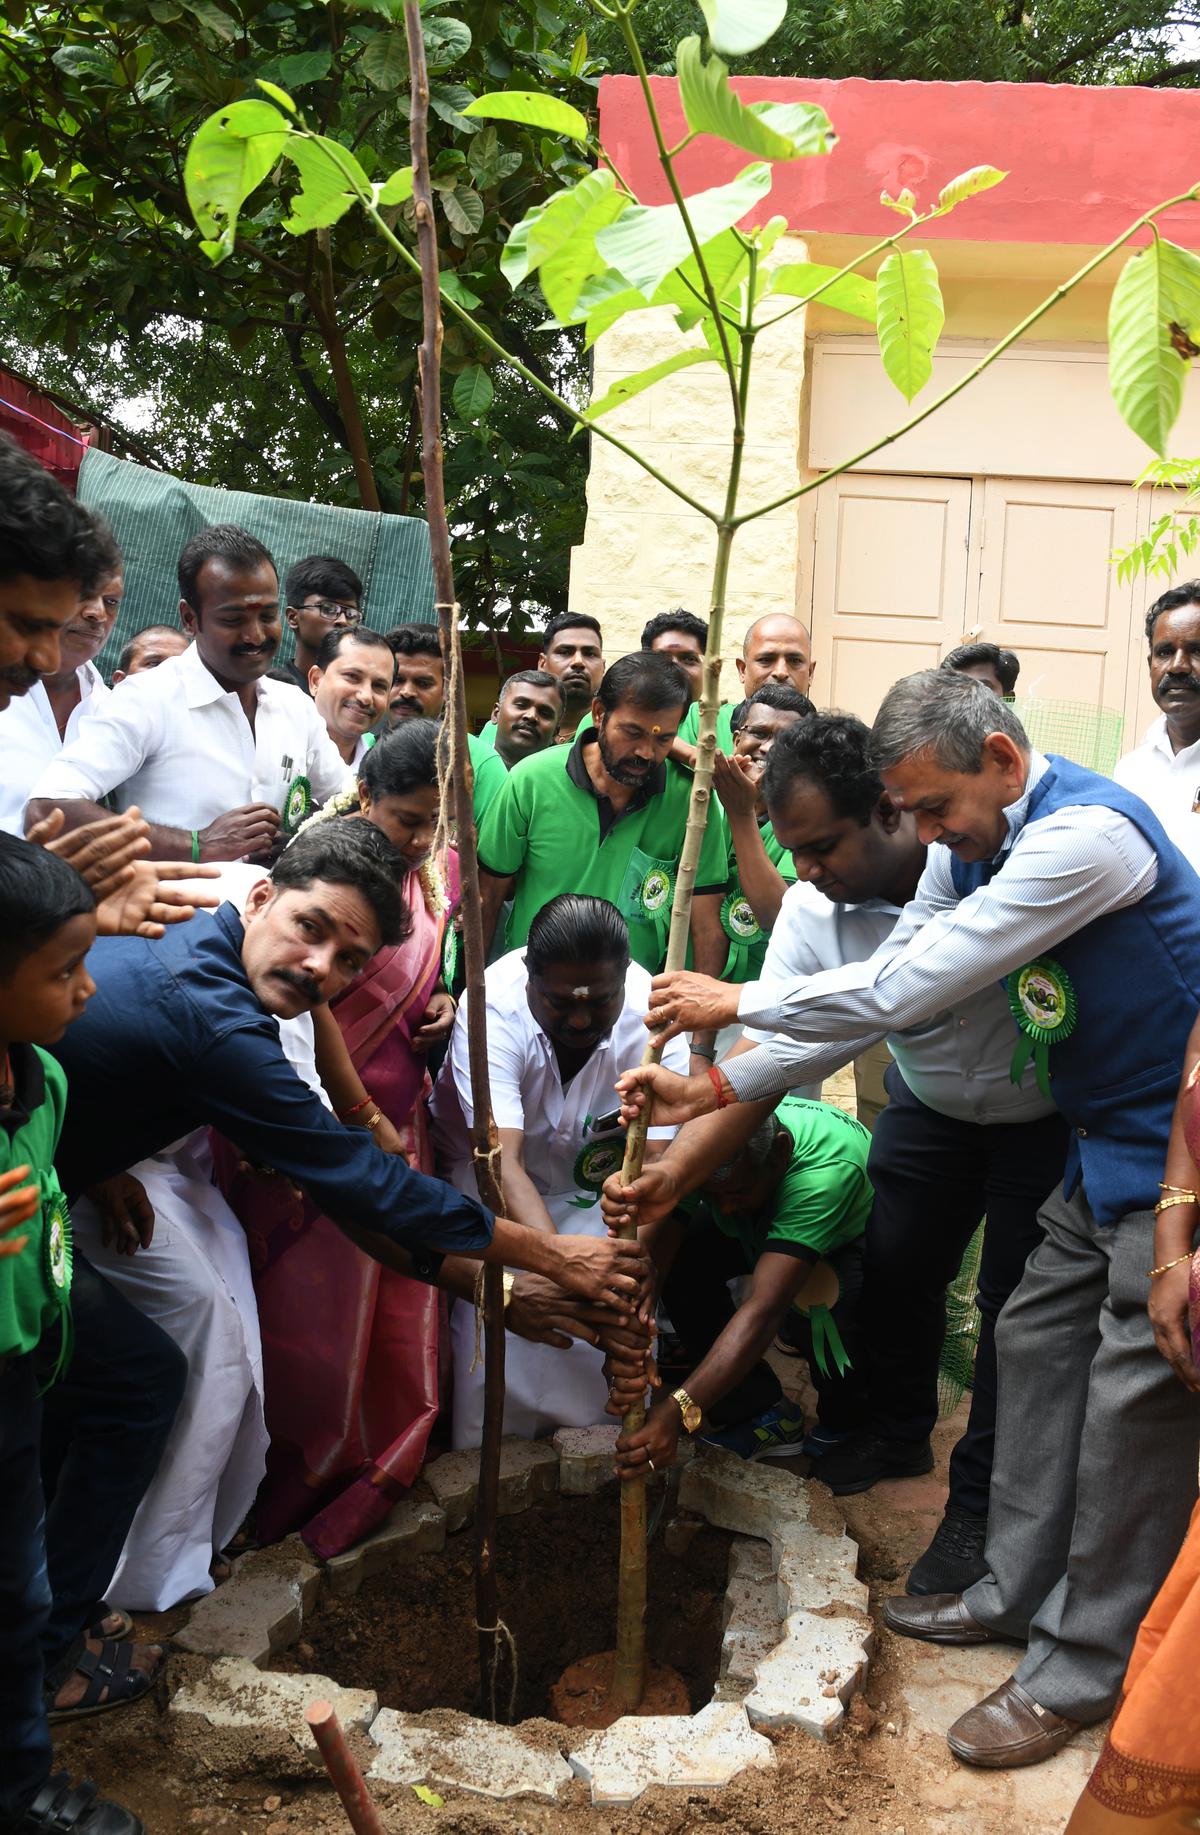 Tree-lovers of Madurai celebrate 100th week of sapling plantation drive